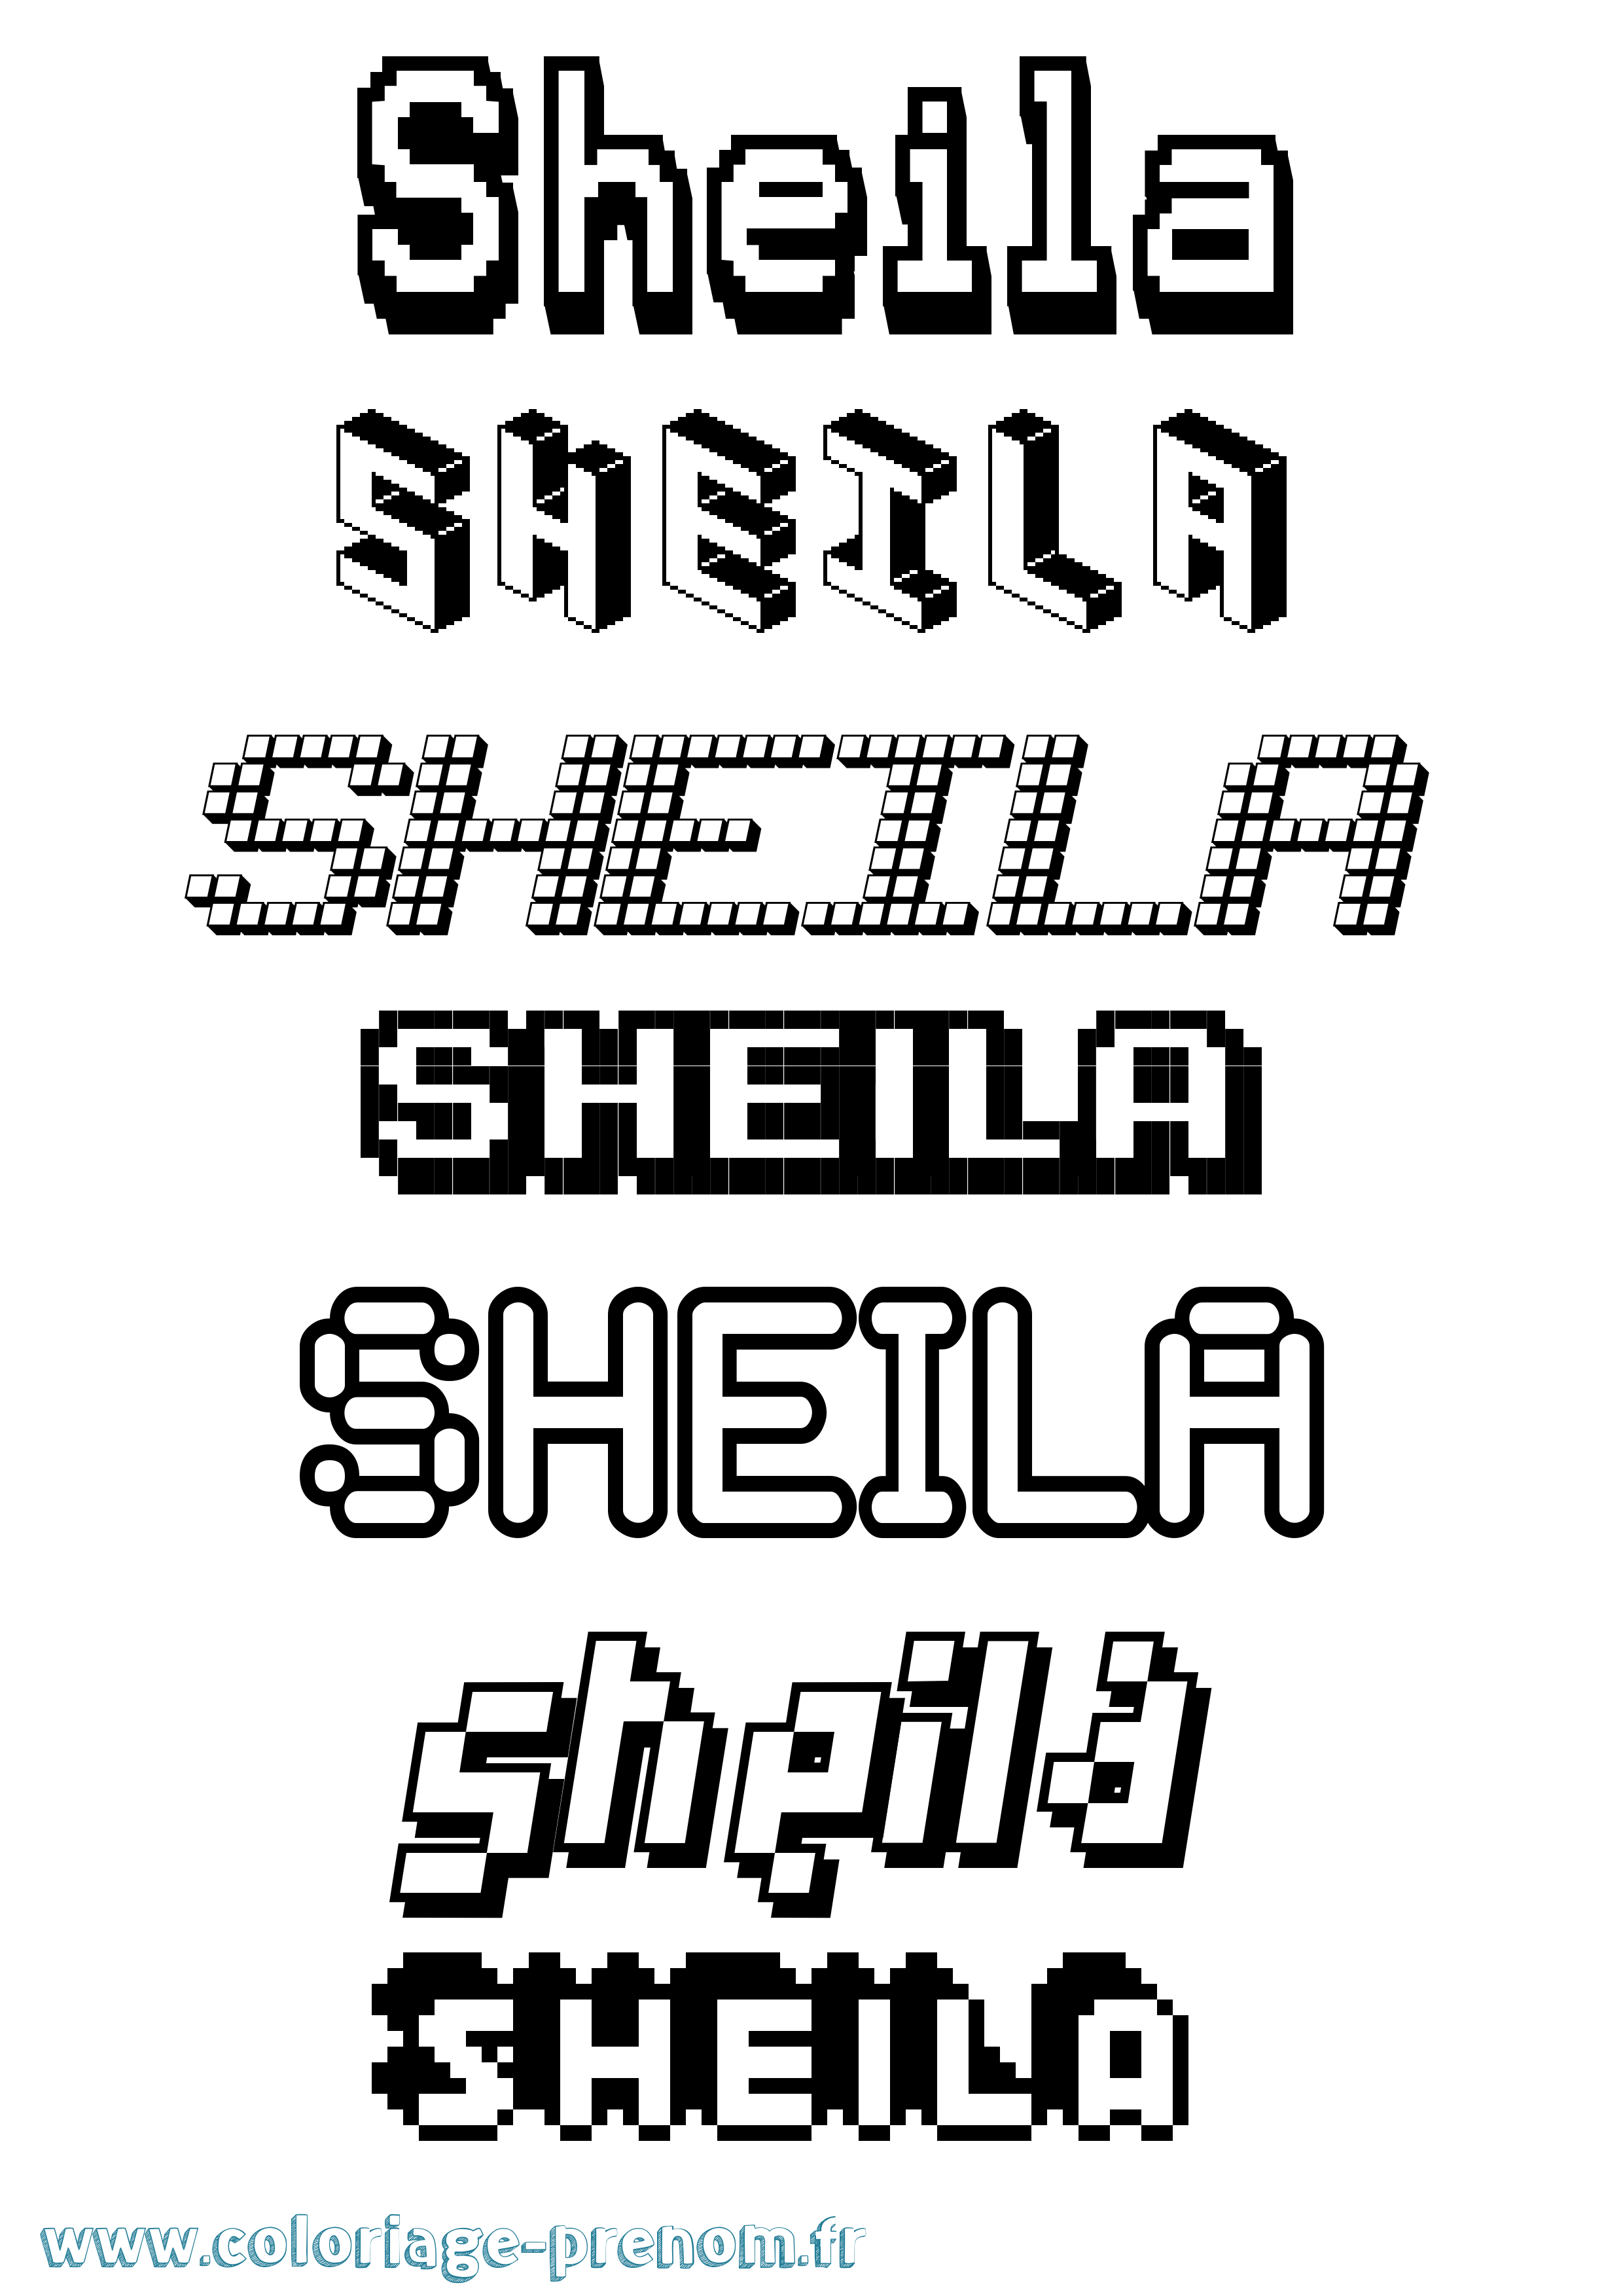 Coloriage prénom Sheila Pixel